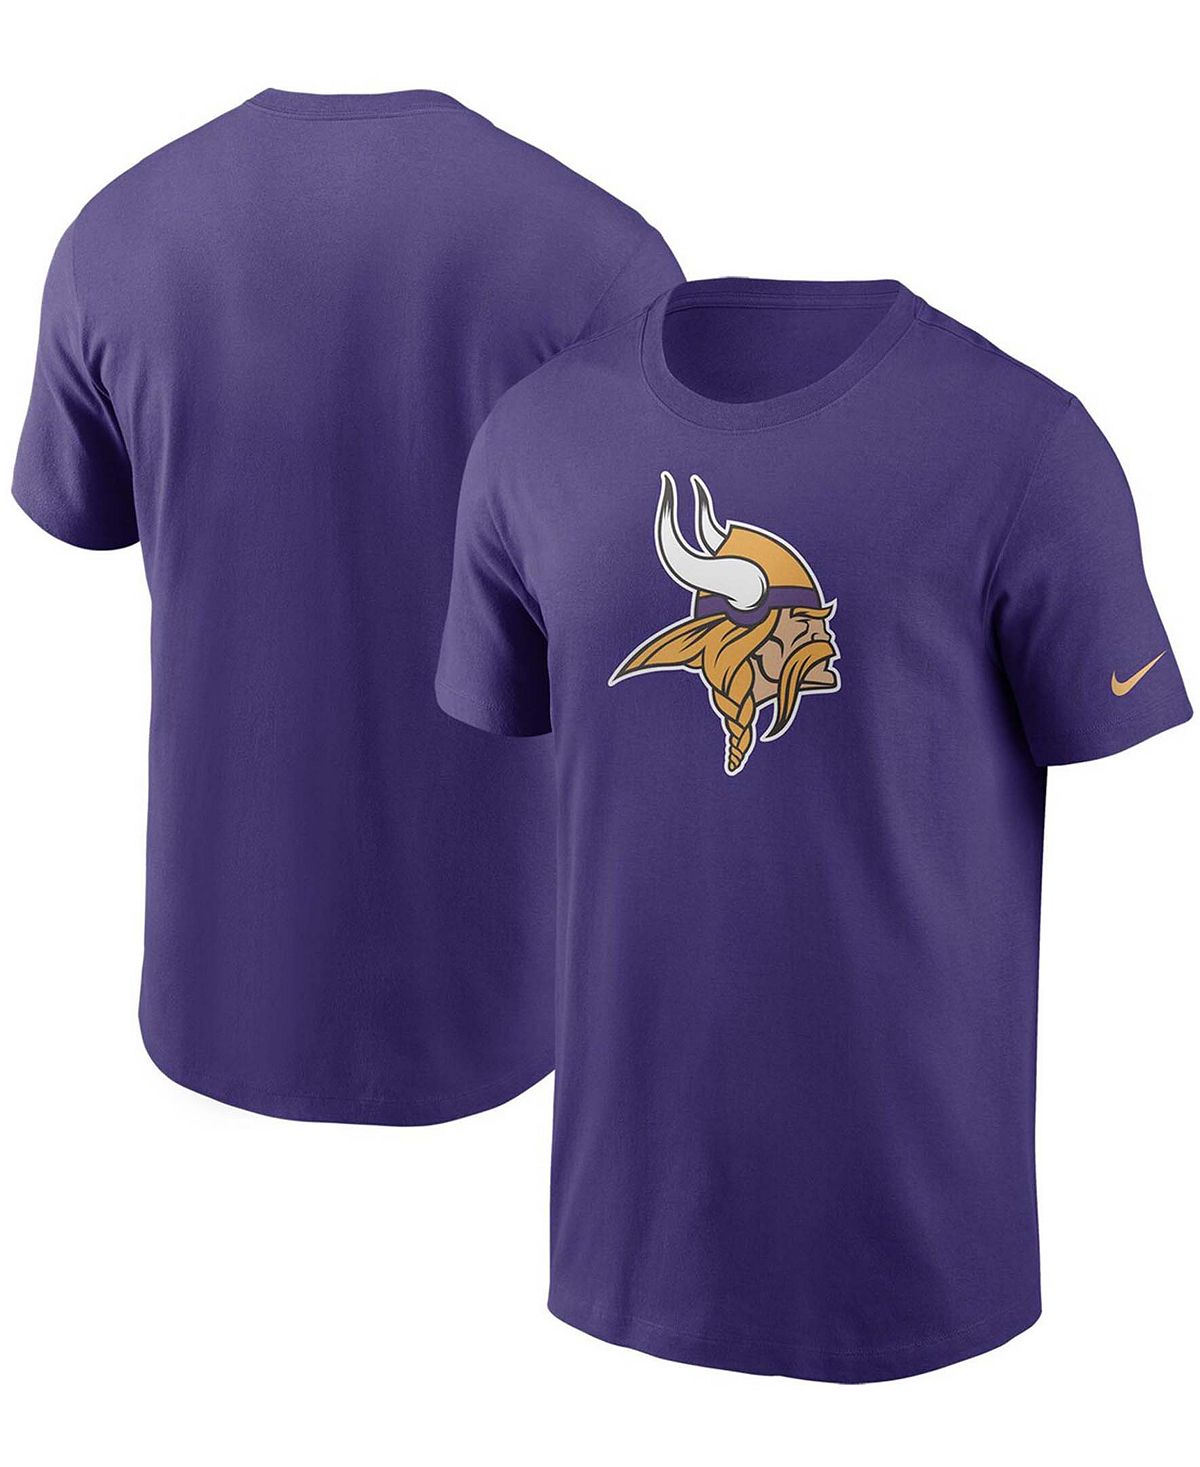 Мужская фиолетовая футболка с логотипом Minnesota Vikings Primary Nike